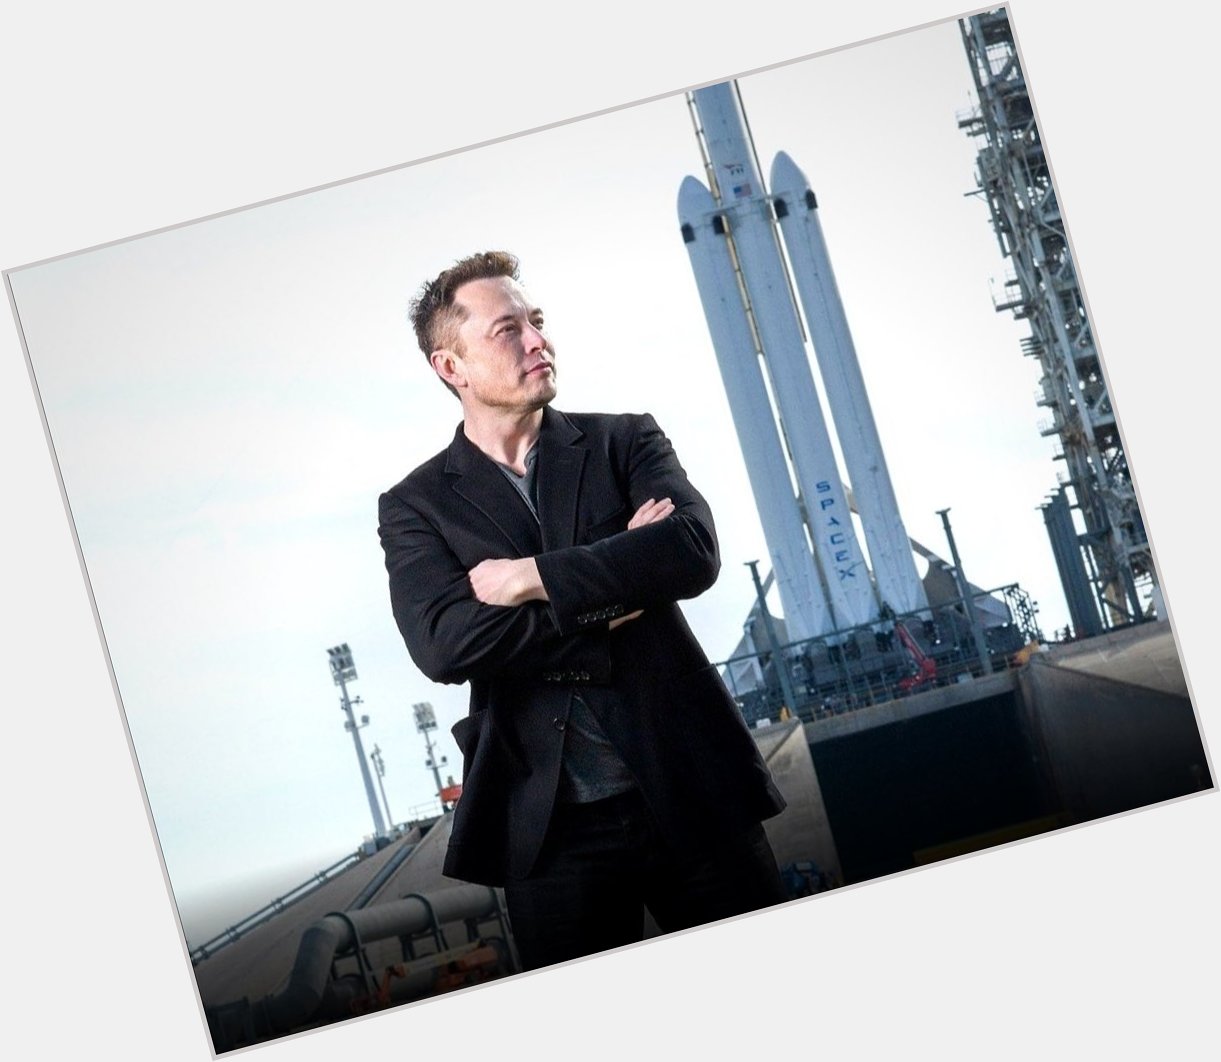  Happy Birthday Elon musk in advance, I\m big fan of yours  